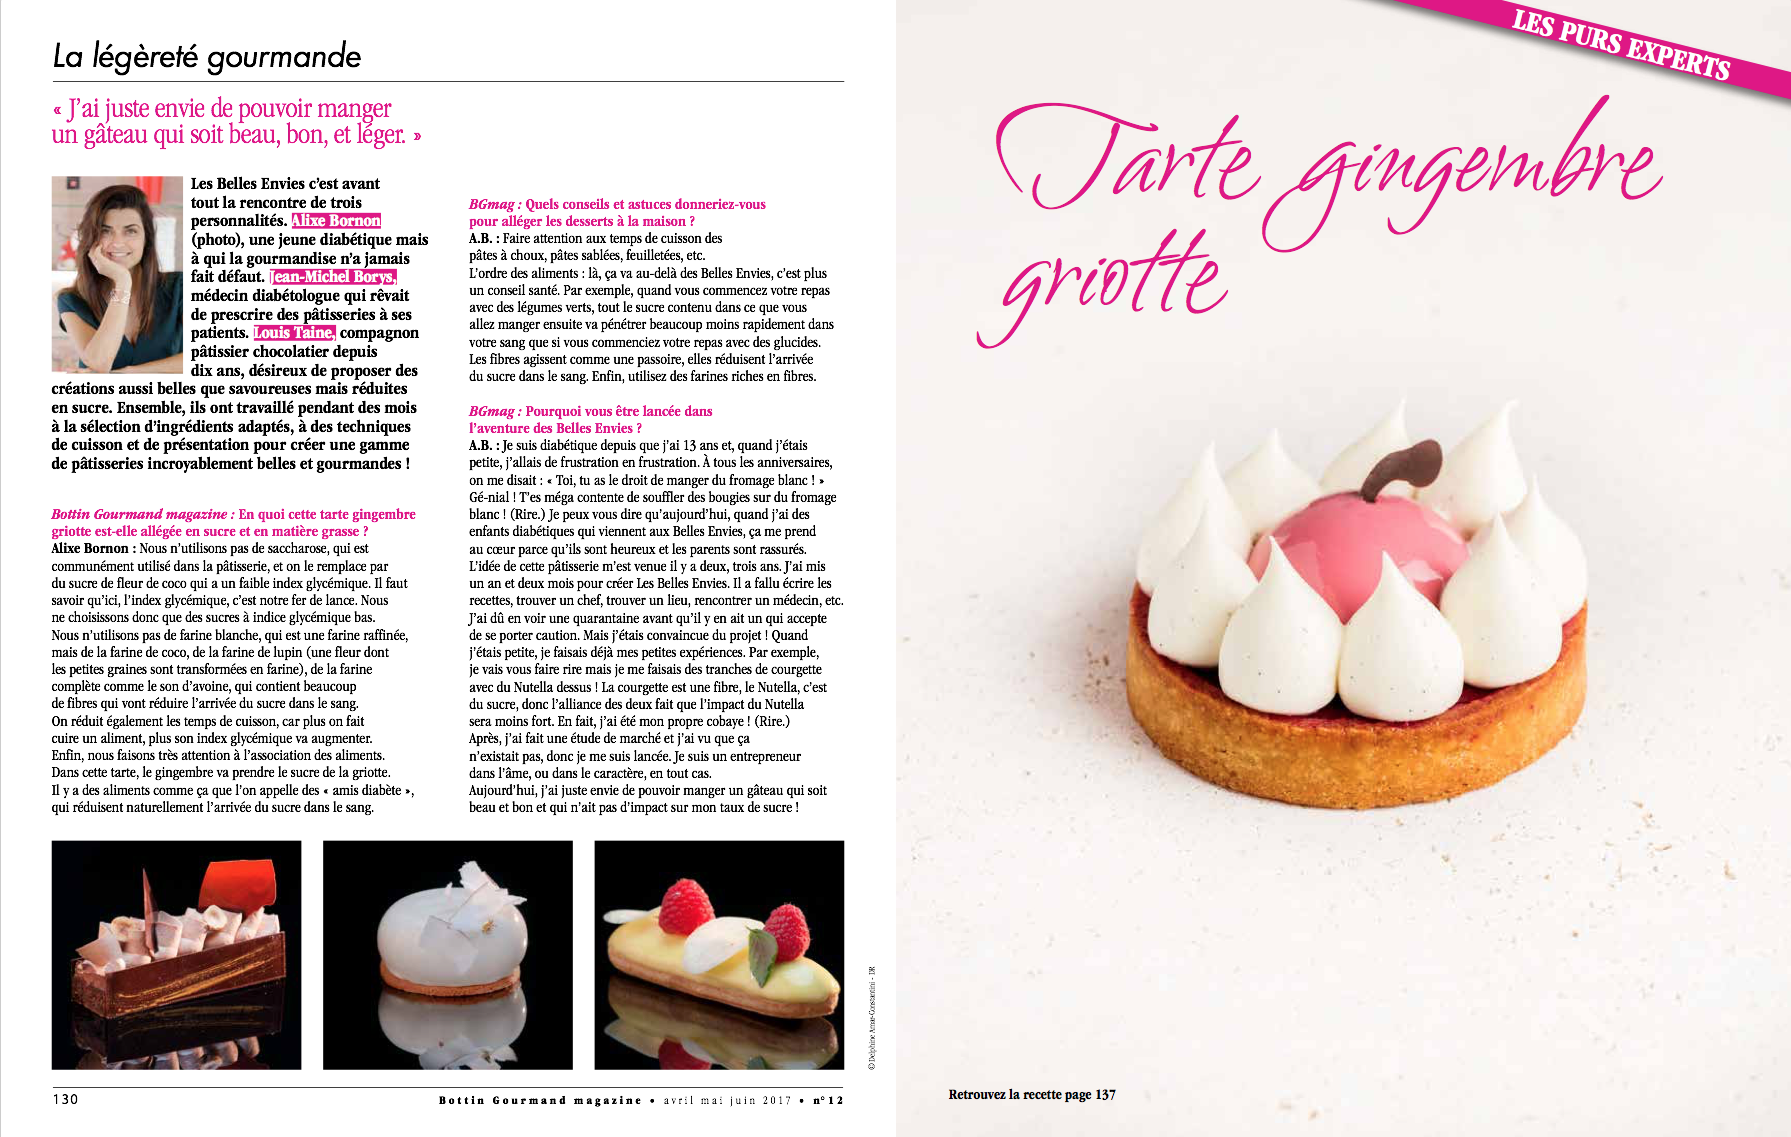 Les belles envies presse - Bottin Gourmand magazine